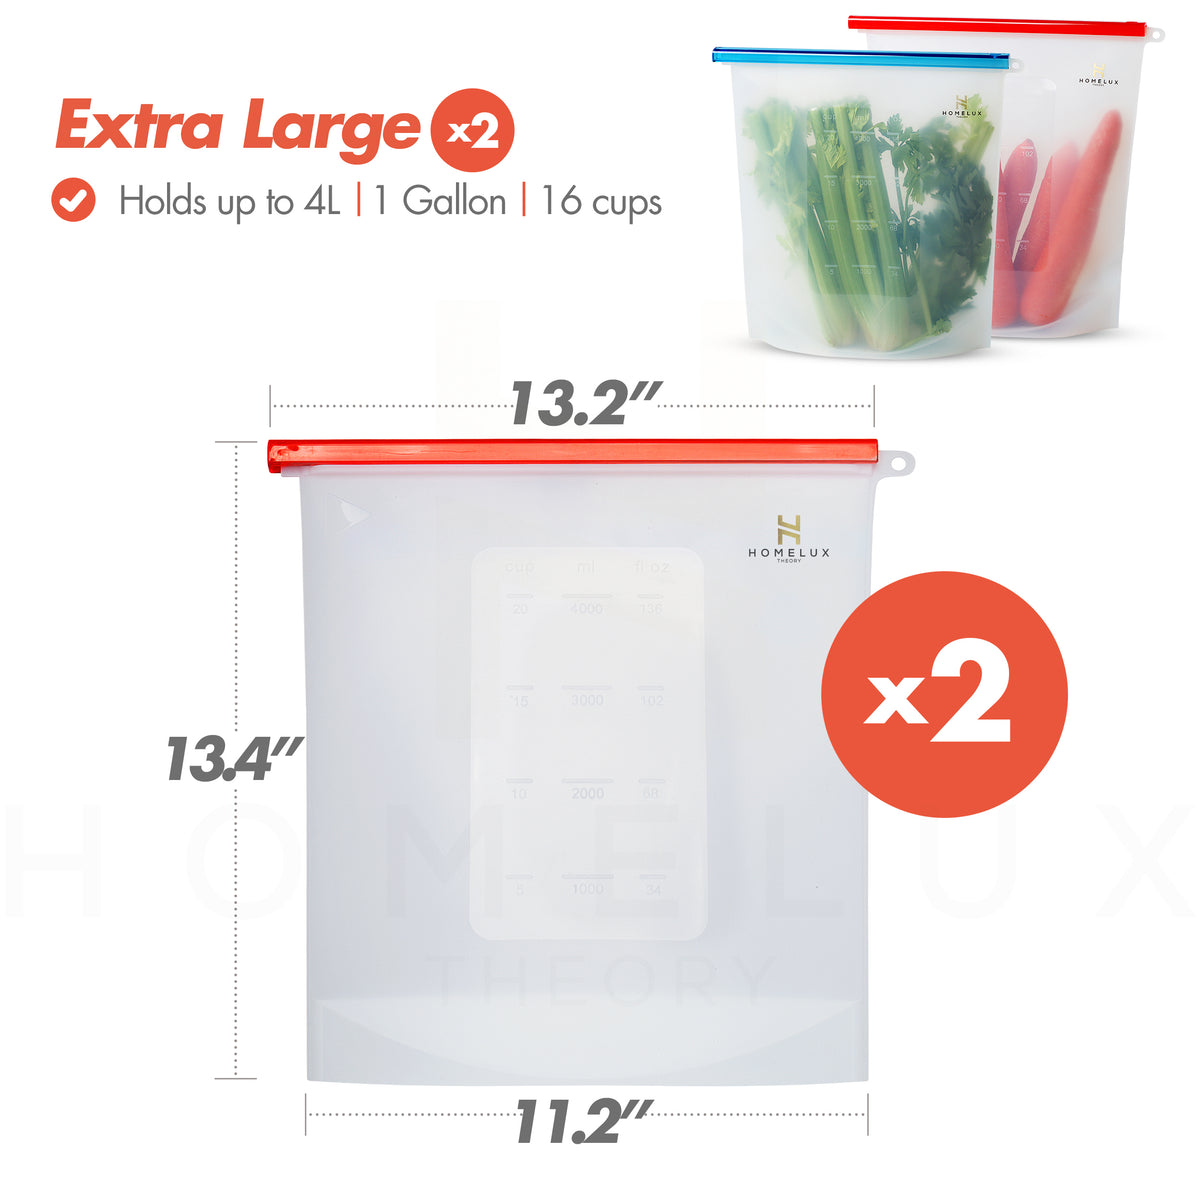 Homeries Reusable Silicone Food Storage bag